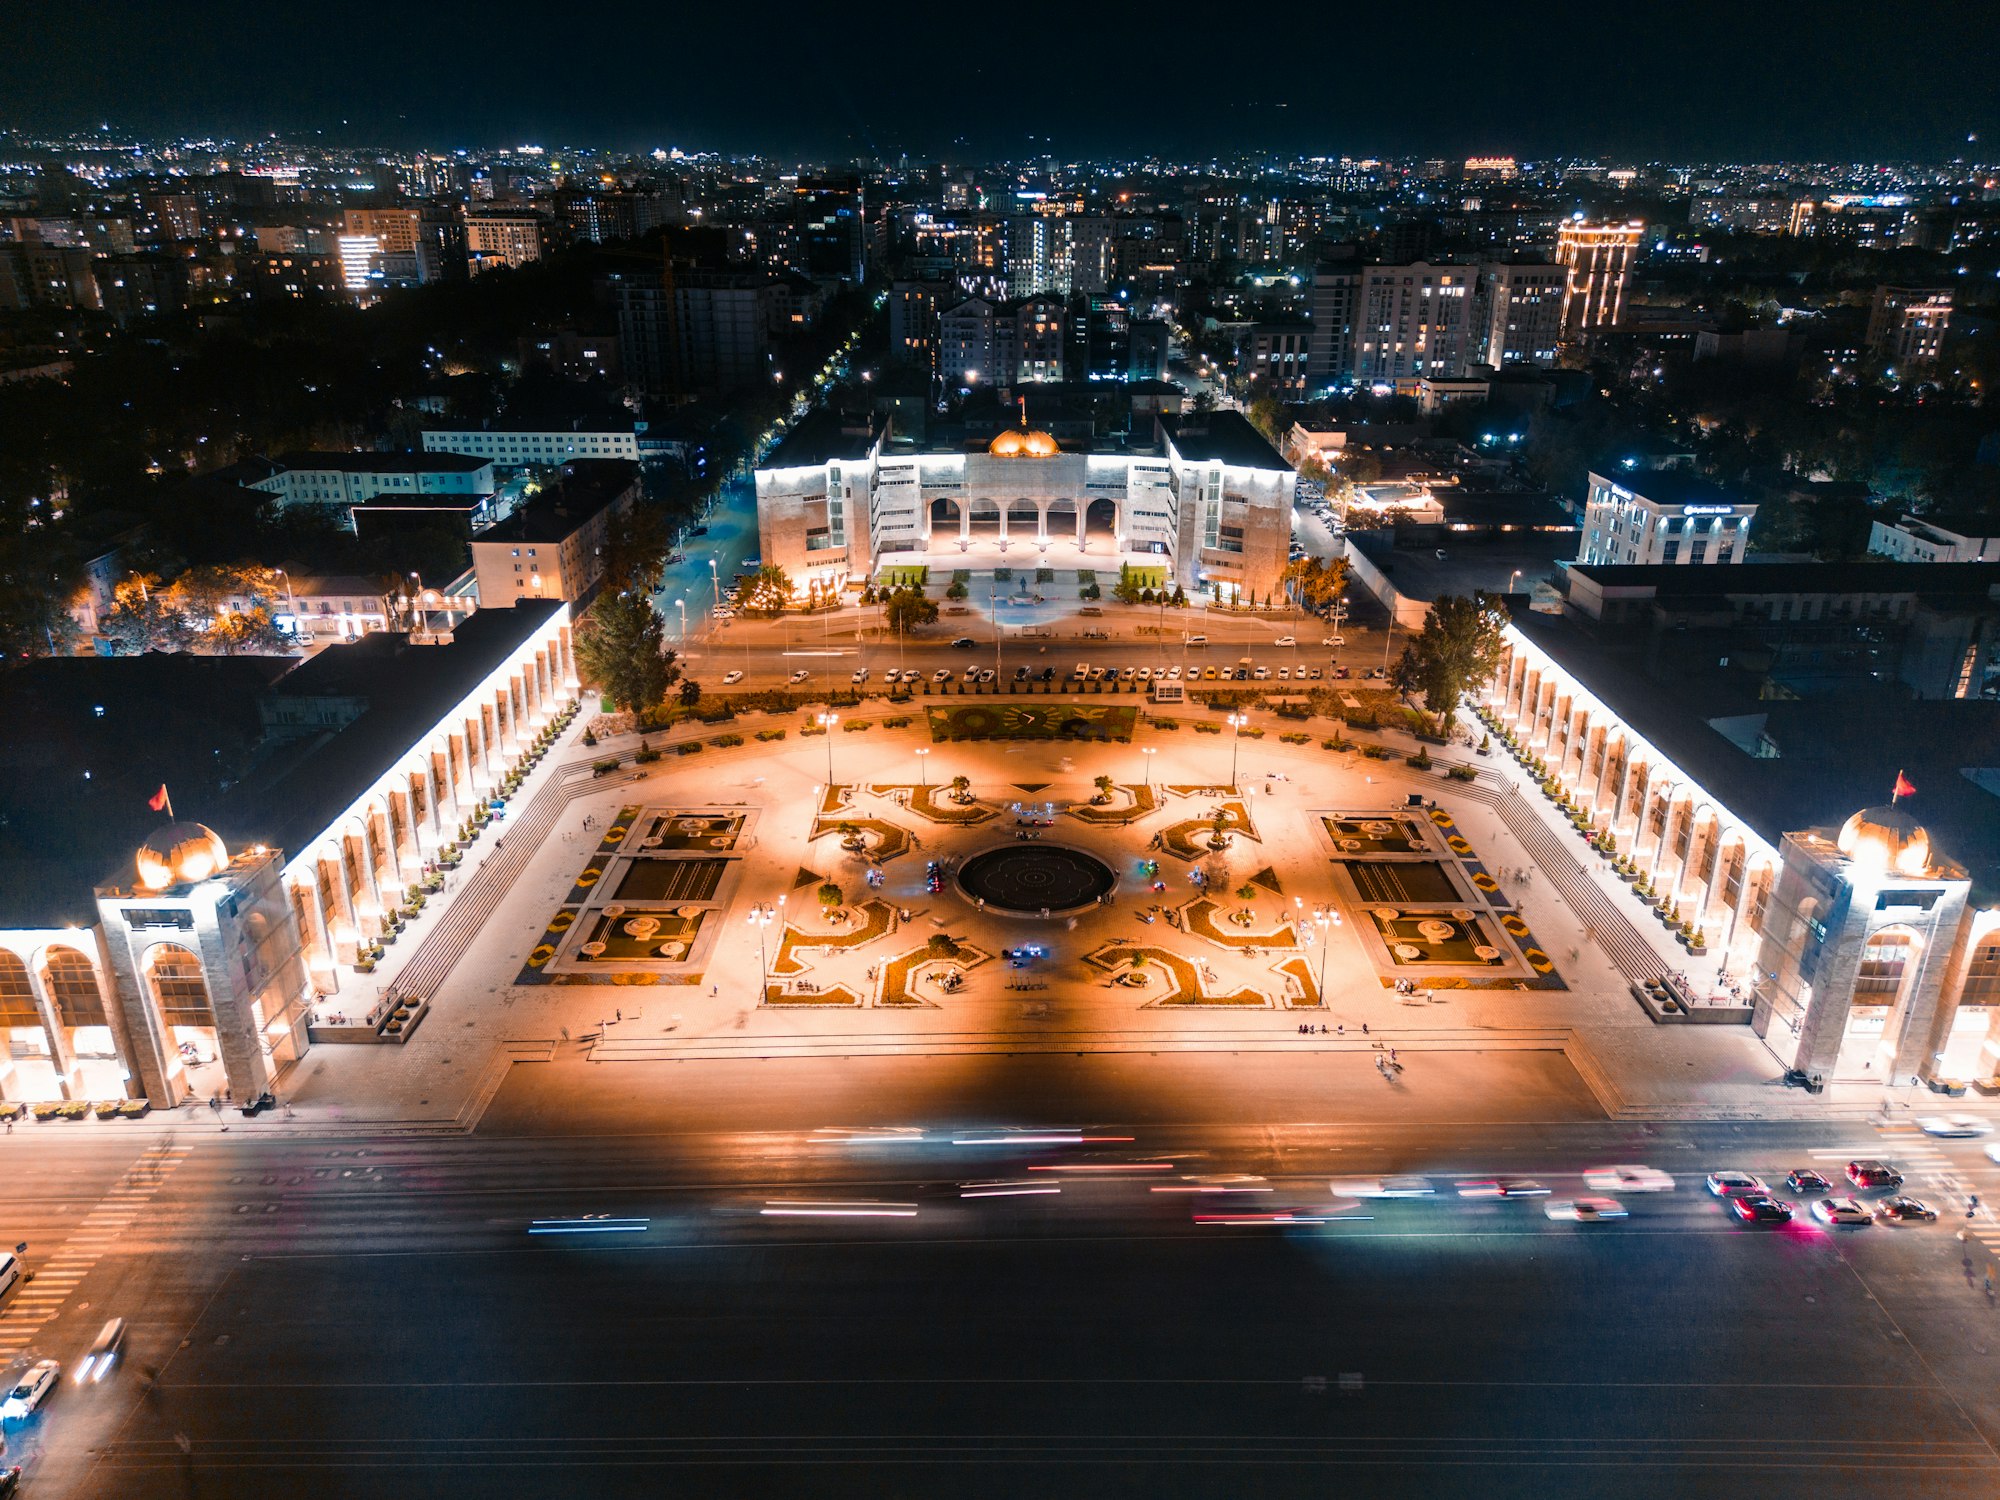 Ala-Too central square of Bishkek city at night